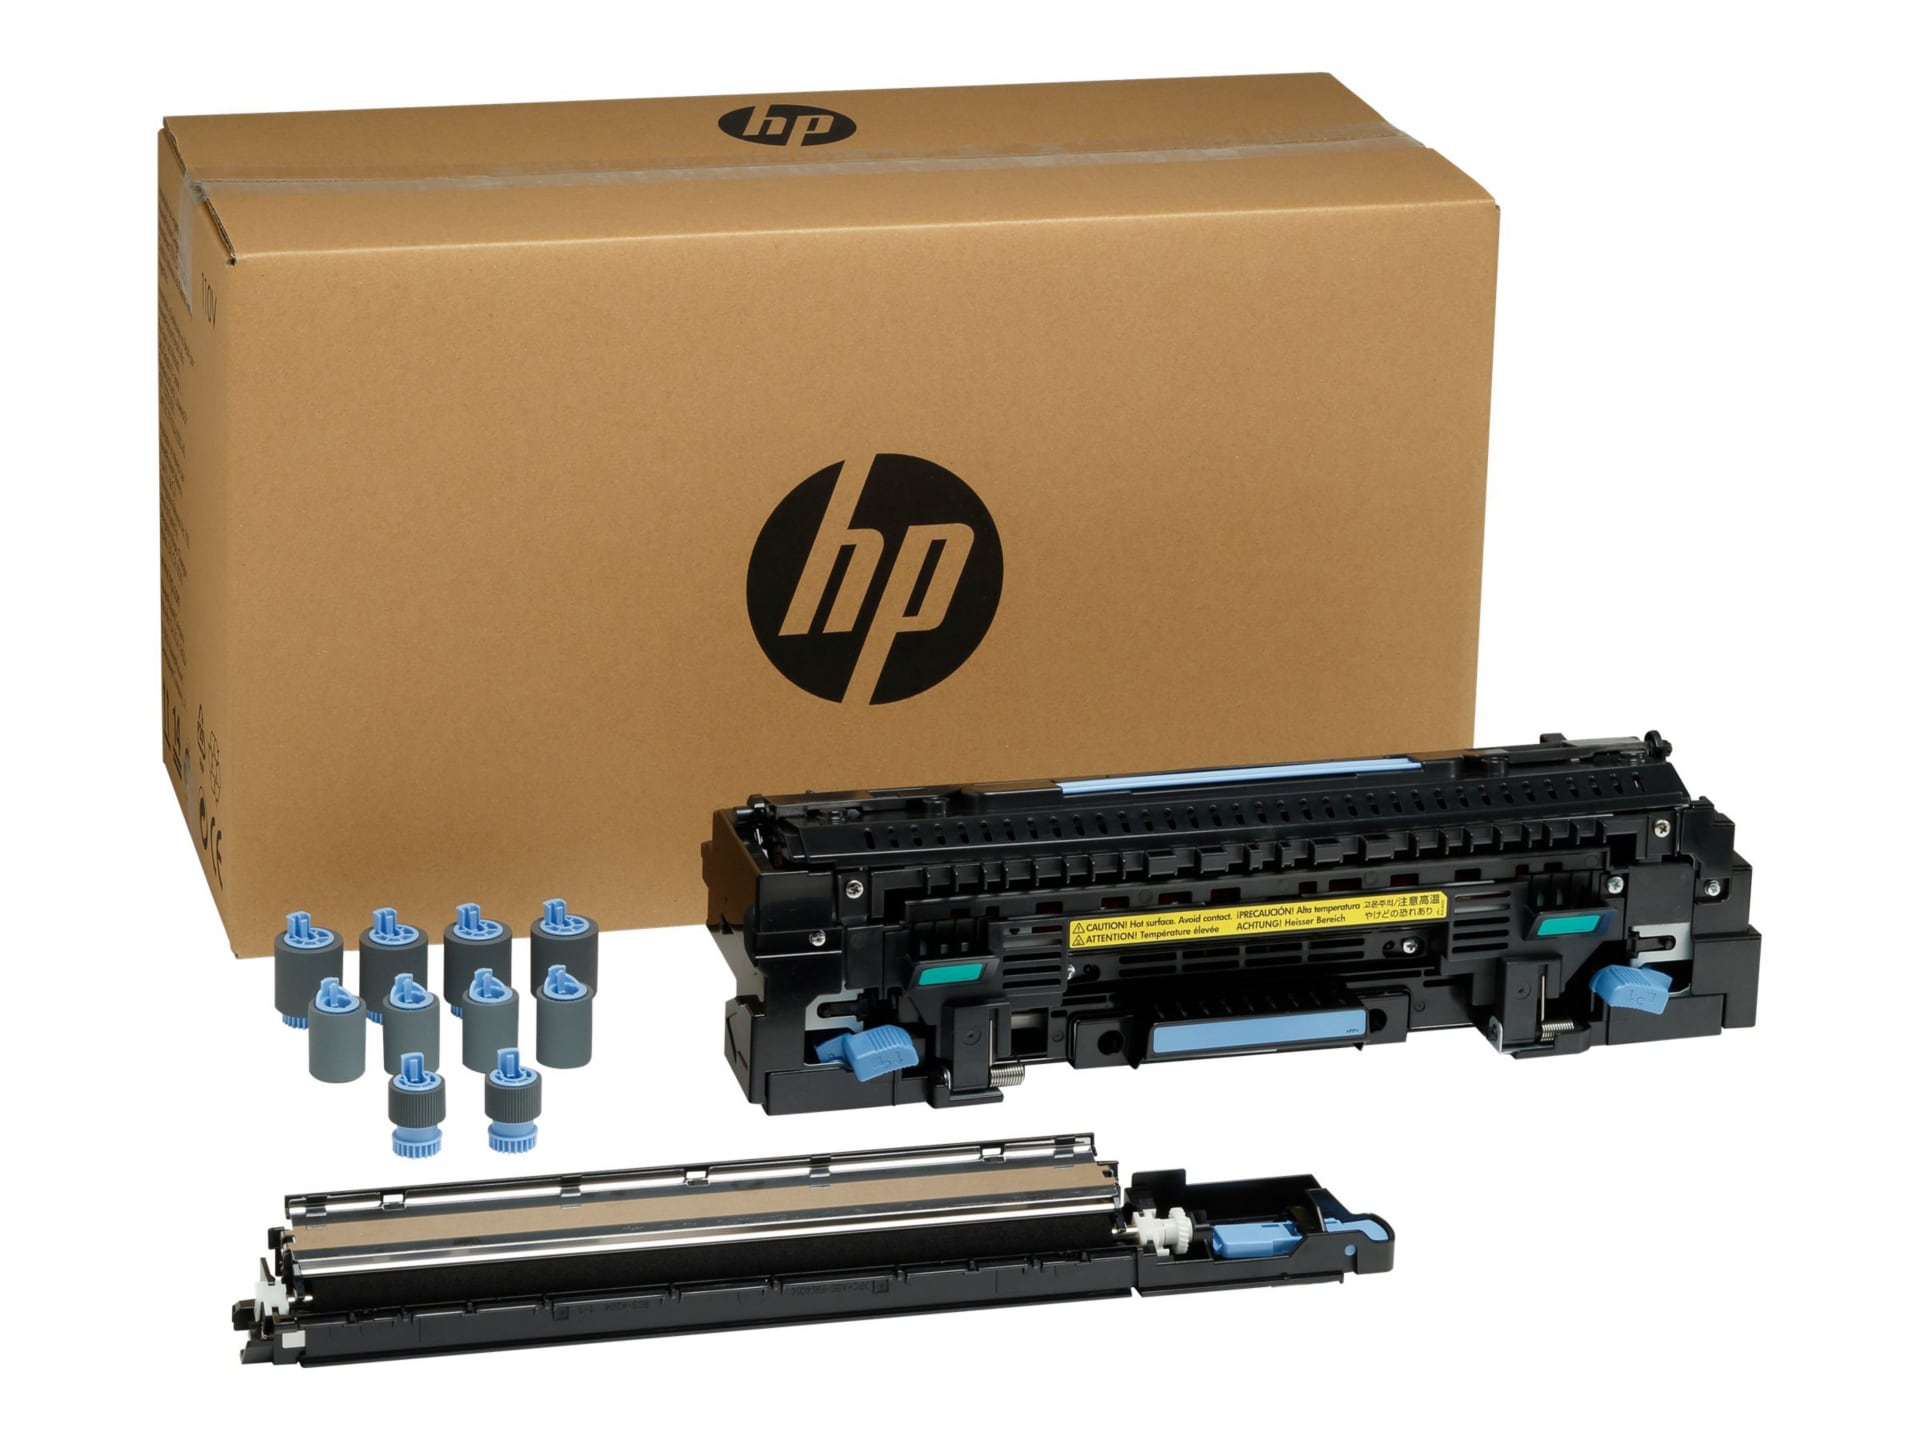 HP - printer maintenance fuser kit - - Maintenance & Waste - CDW.com